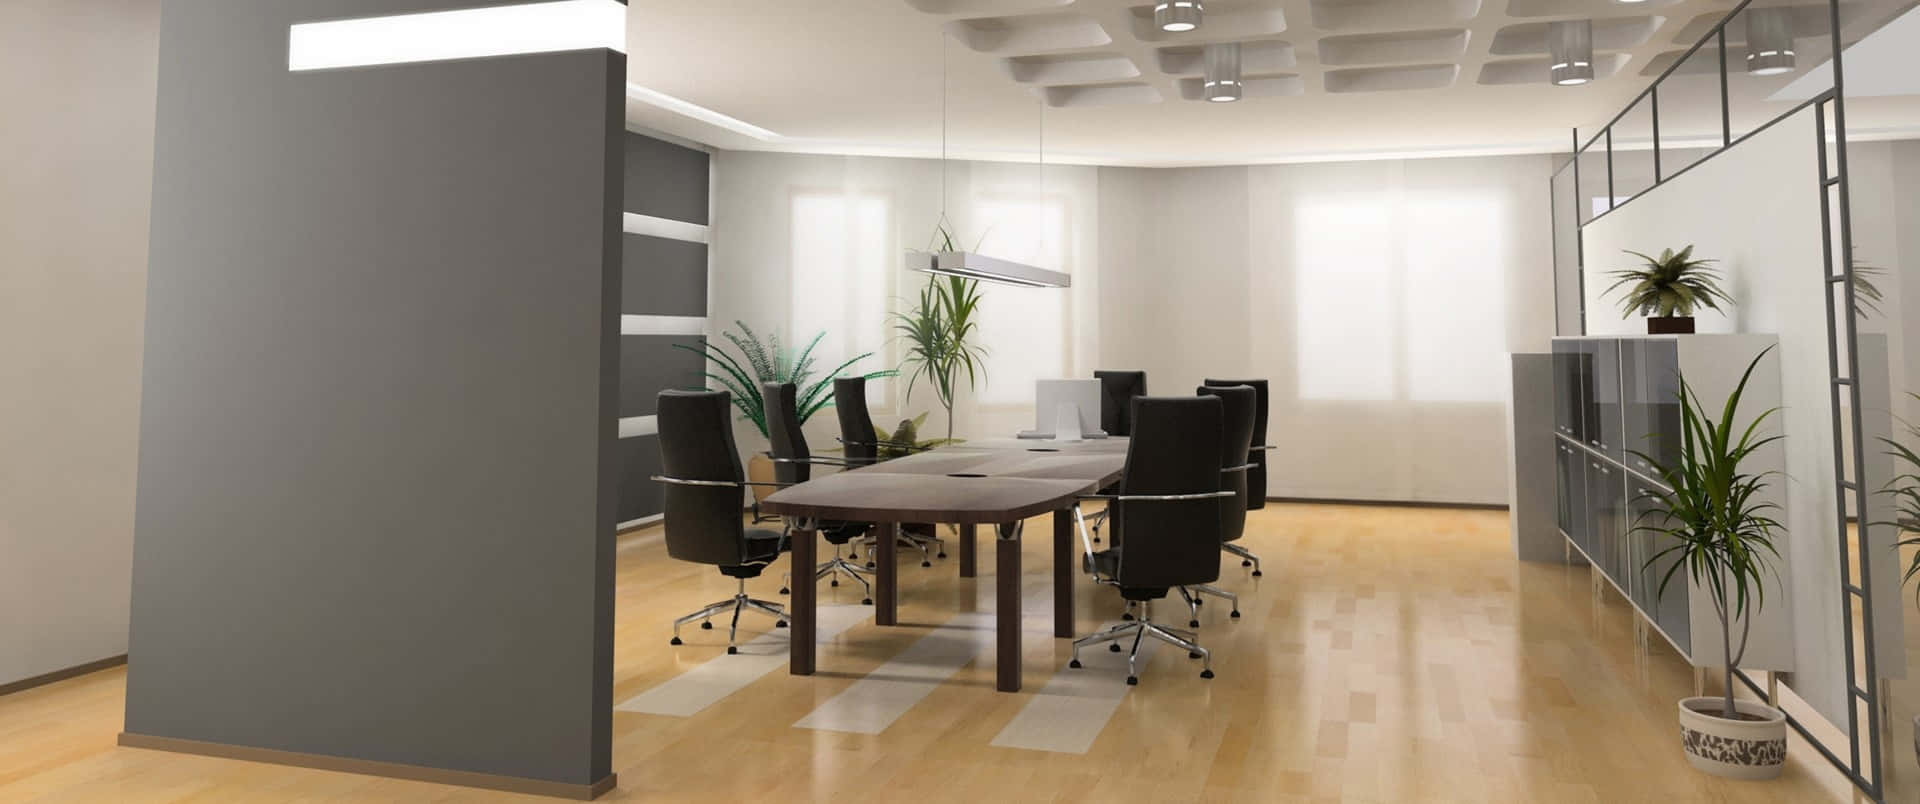 Gray Minimalist Interior Design 3440x1440p Office Background